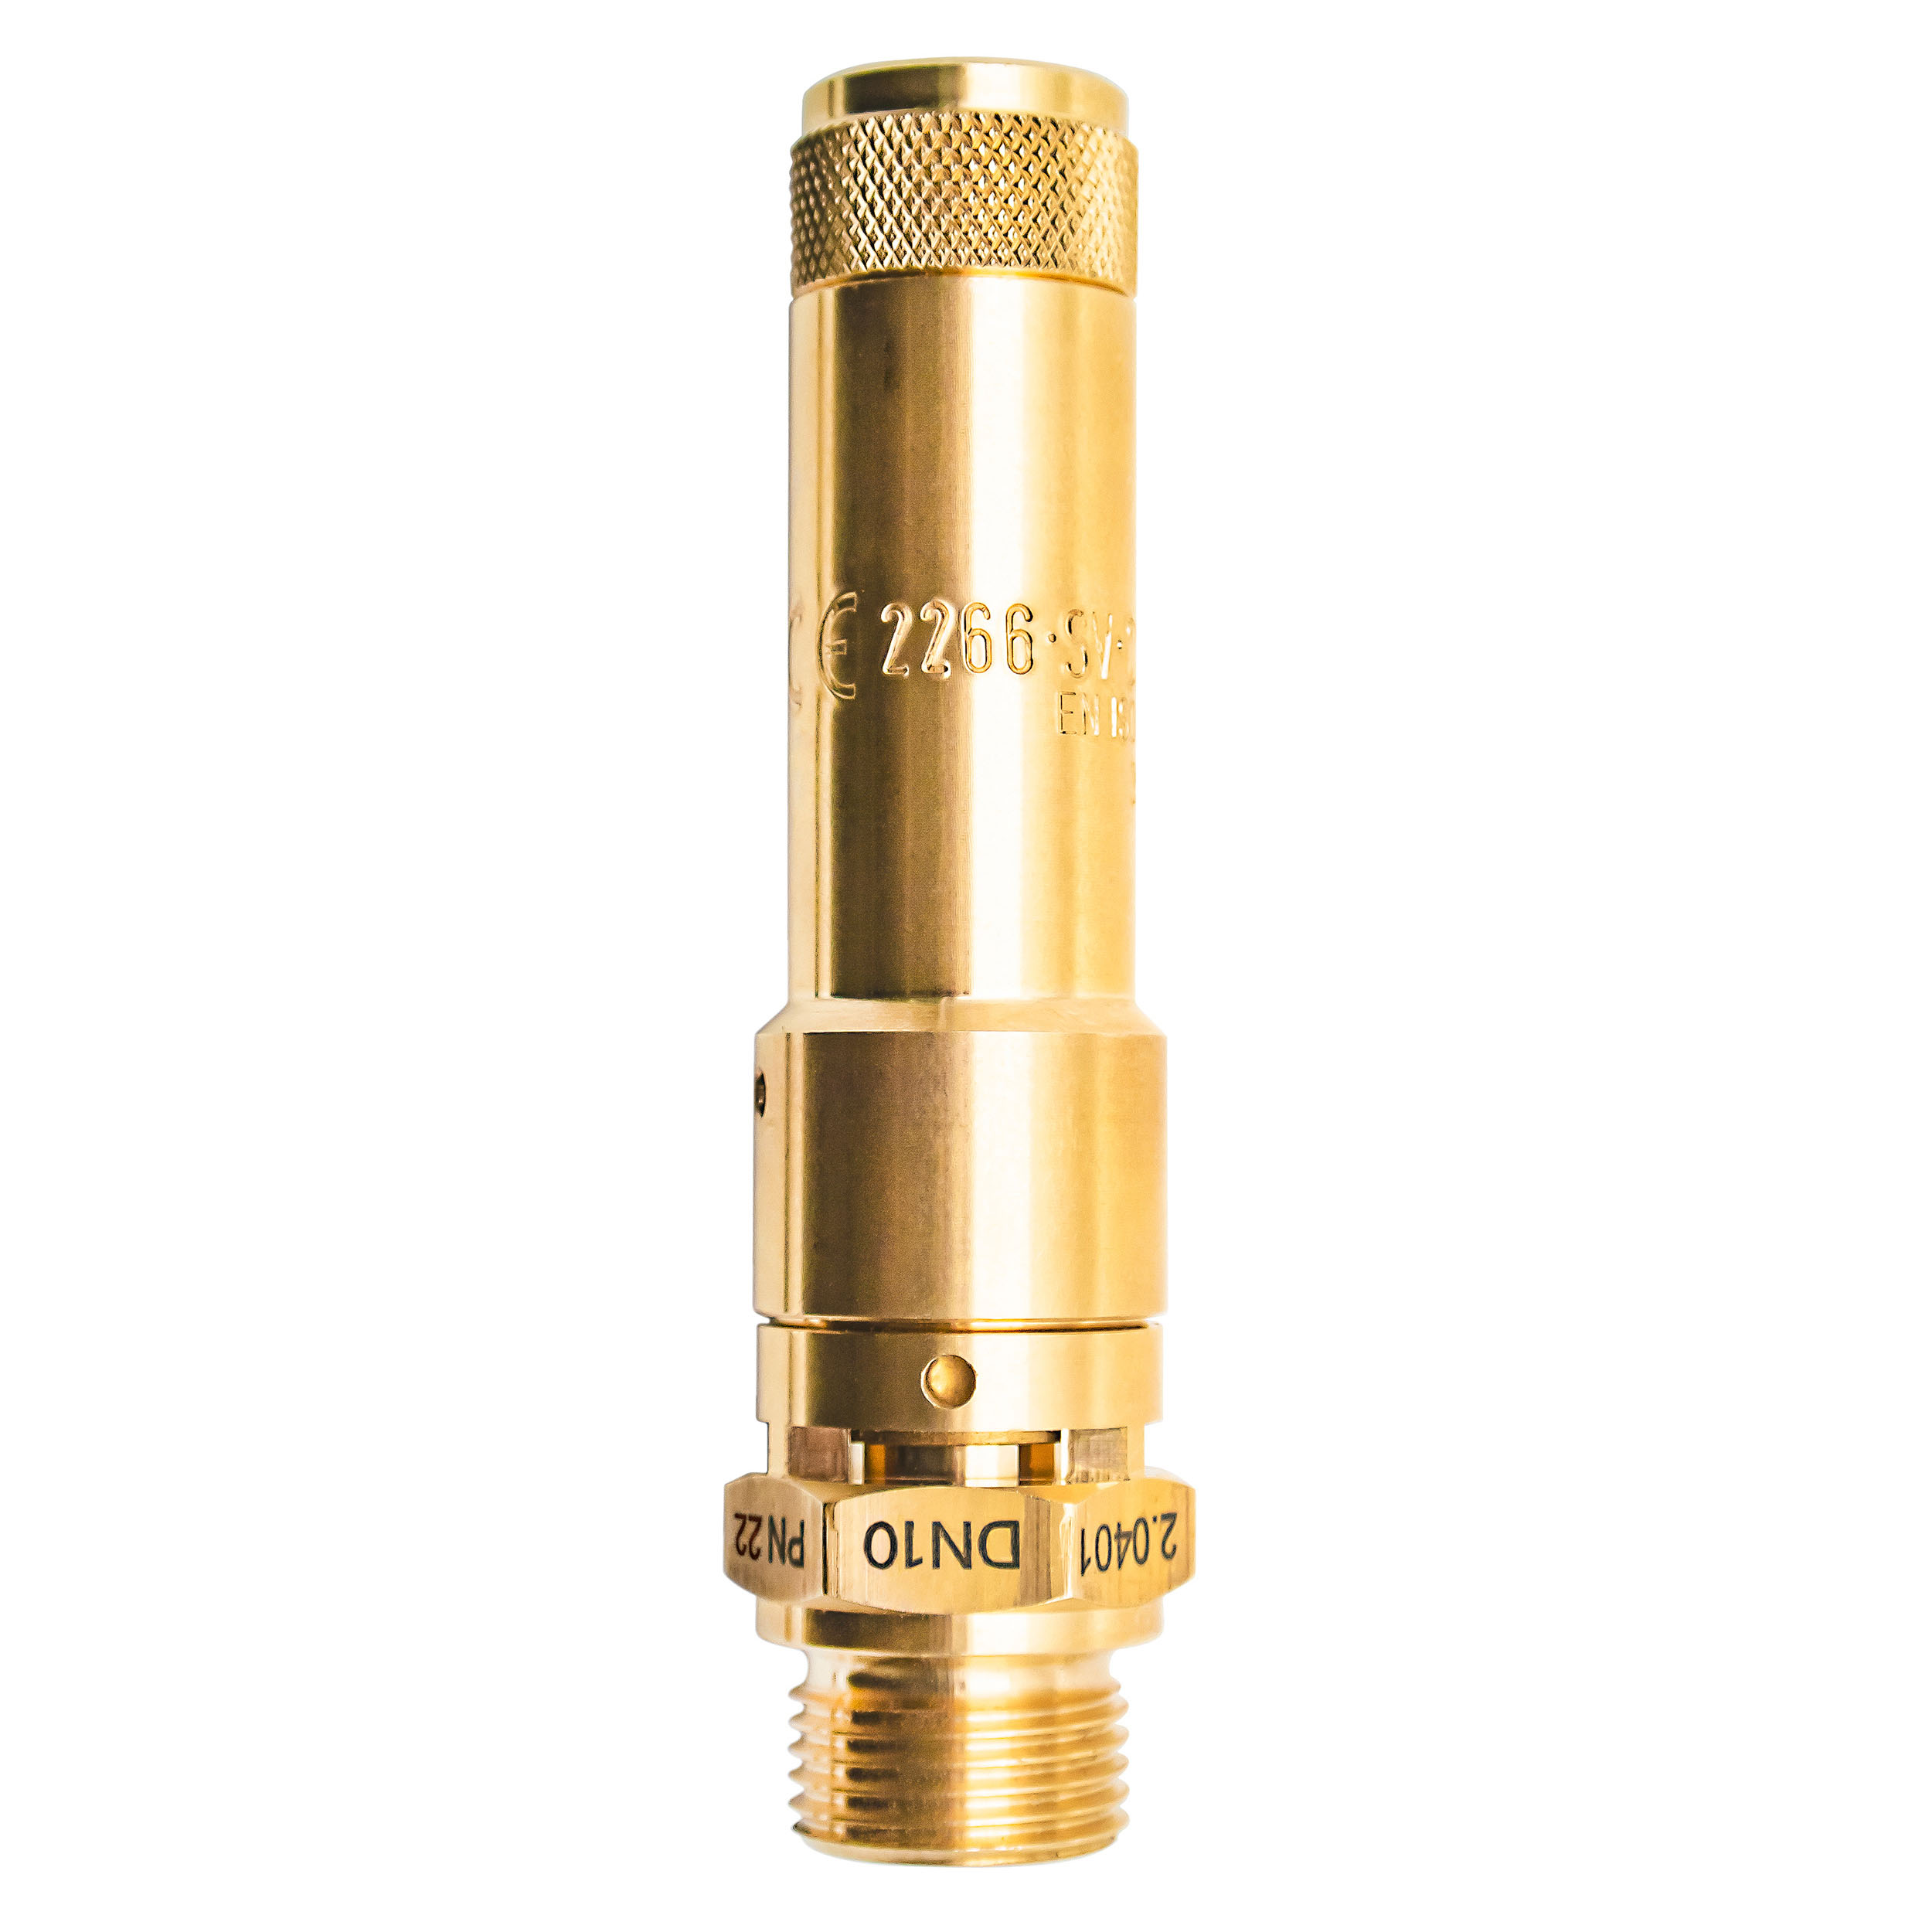 Savety valve component tested DN 10, G¾, set pressure: 2.6 bar (37,7 psi)